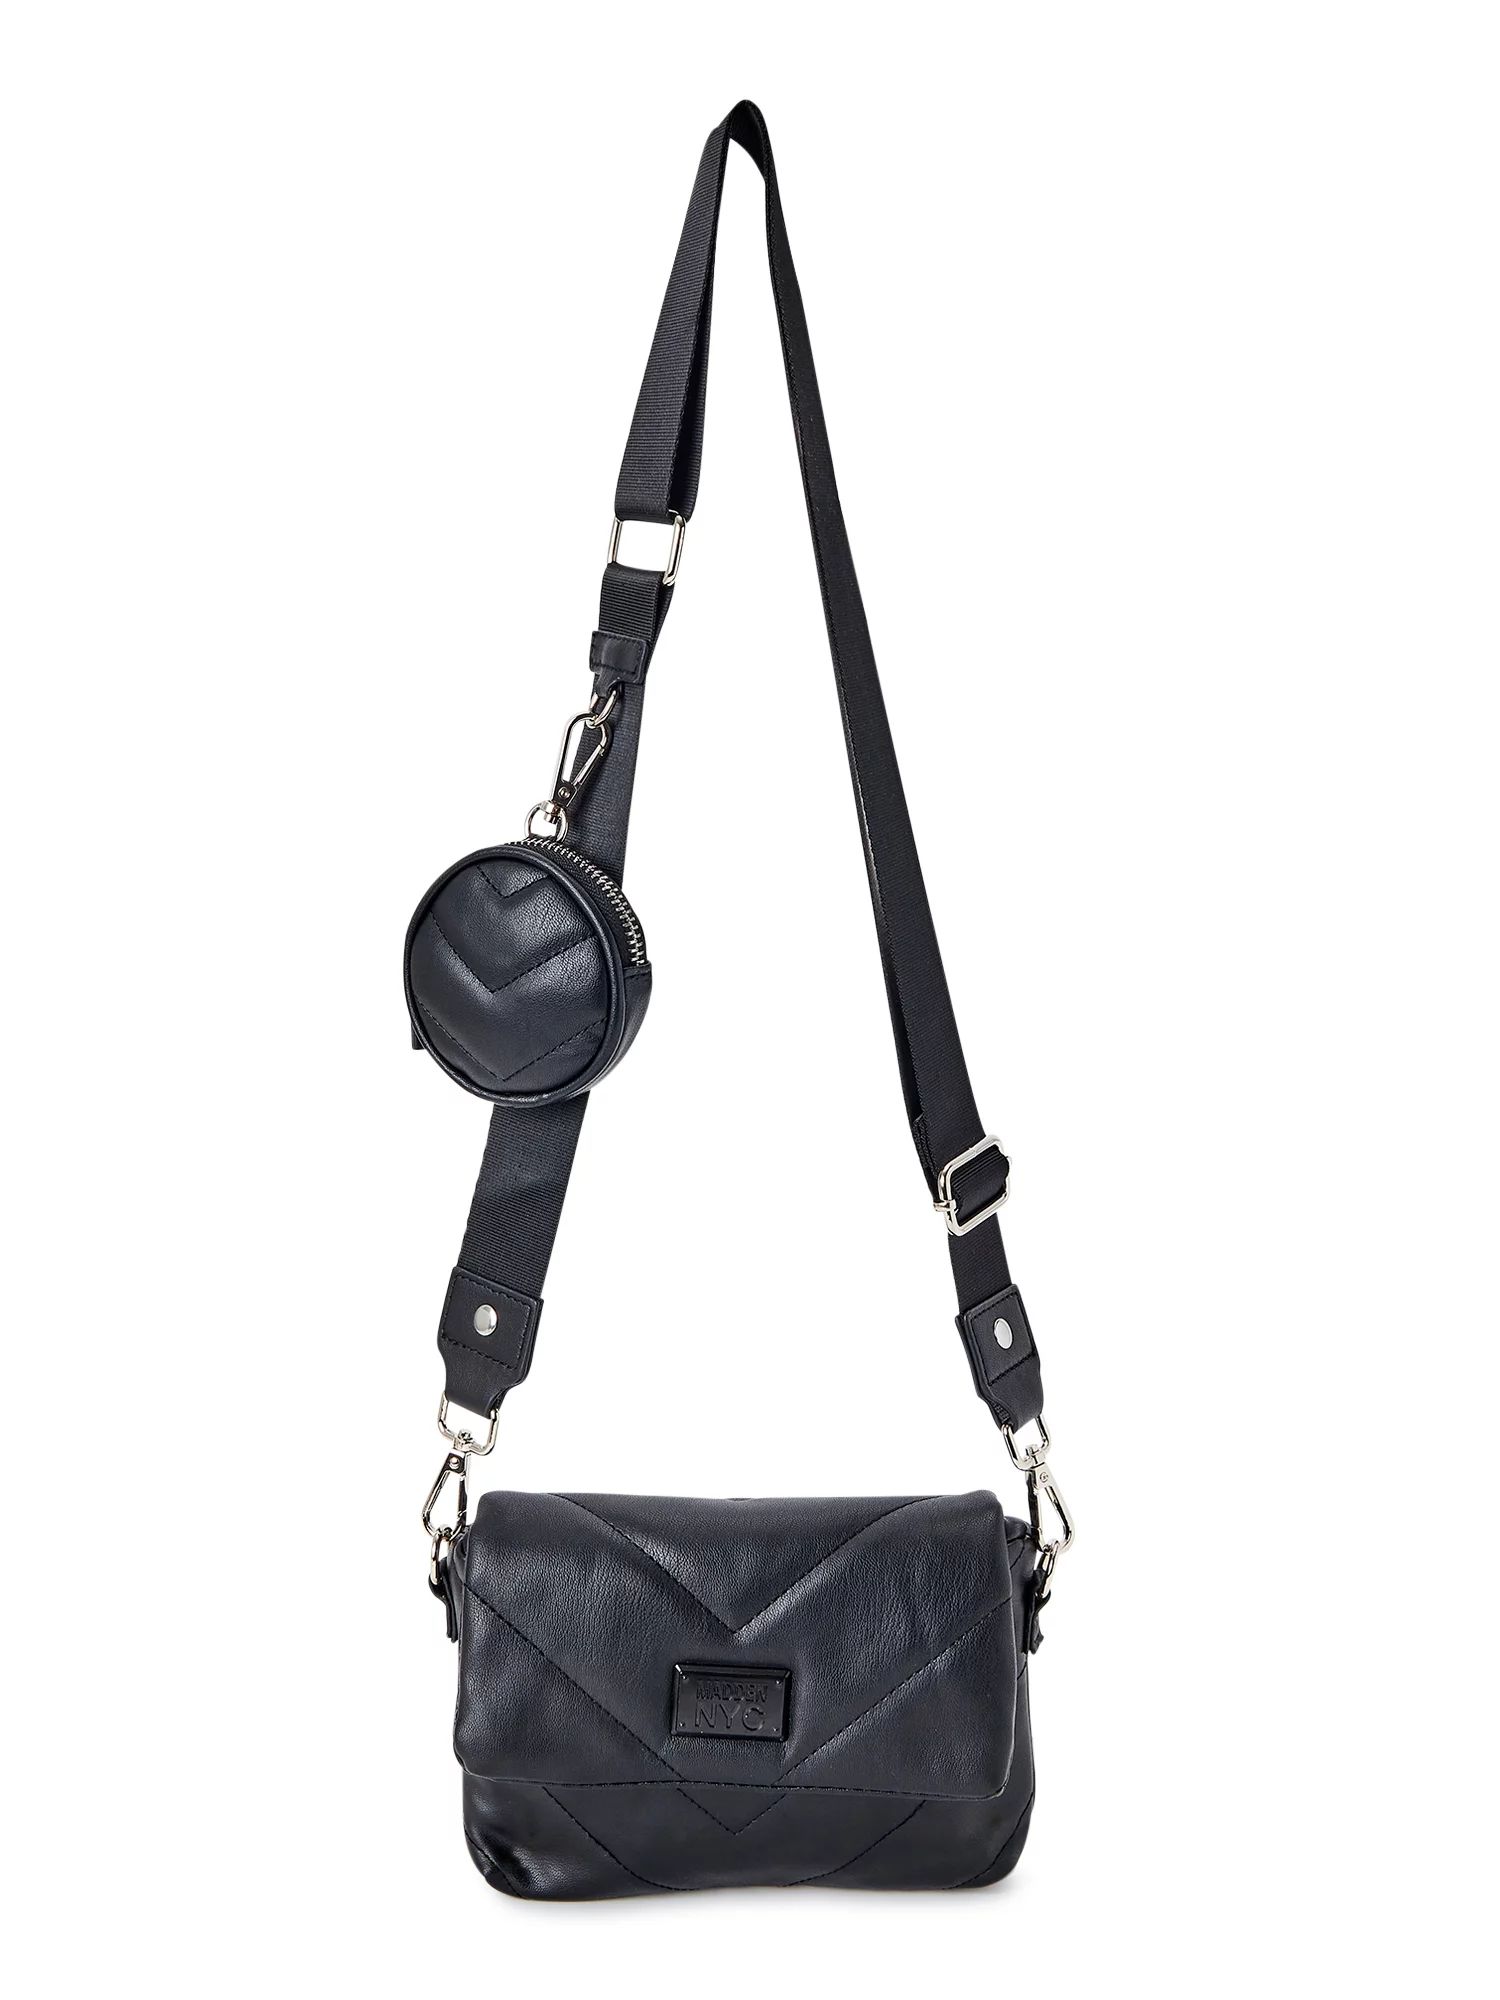 Madden NYC Women's Quilted Crossbody Handbag Black | Walmart (US)